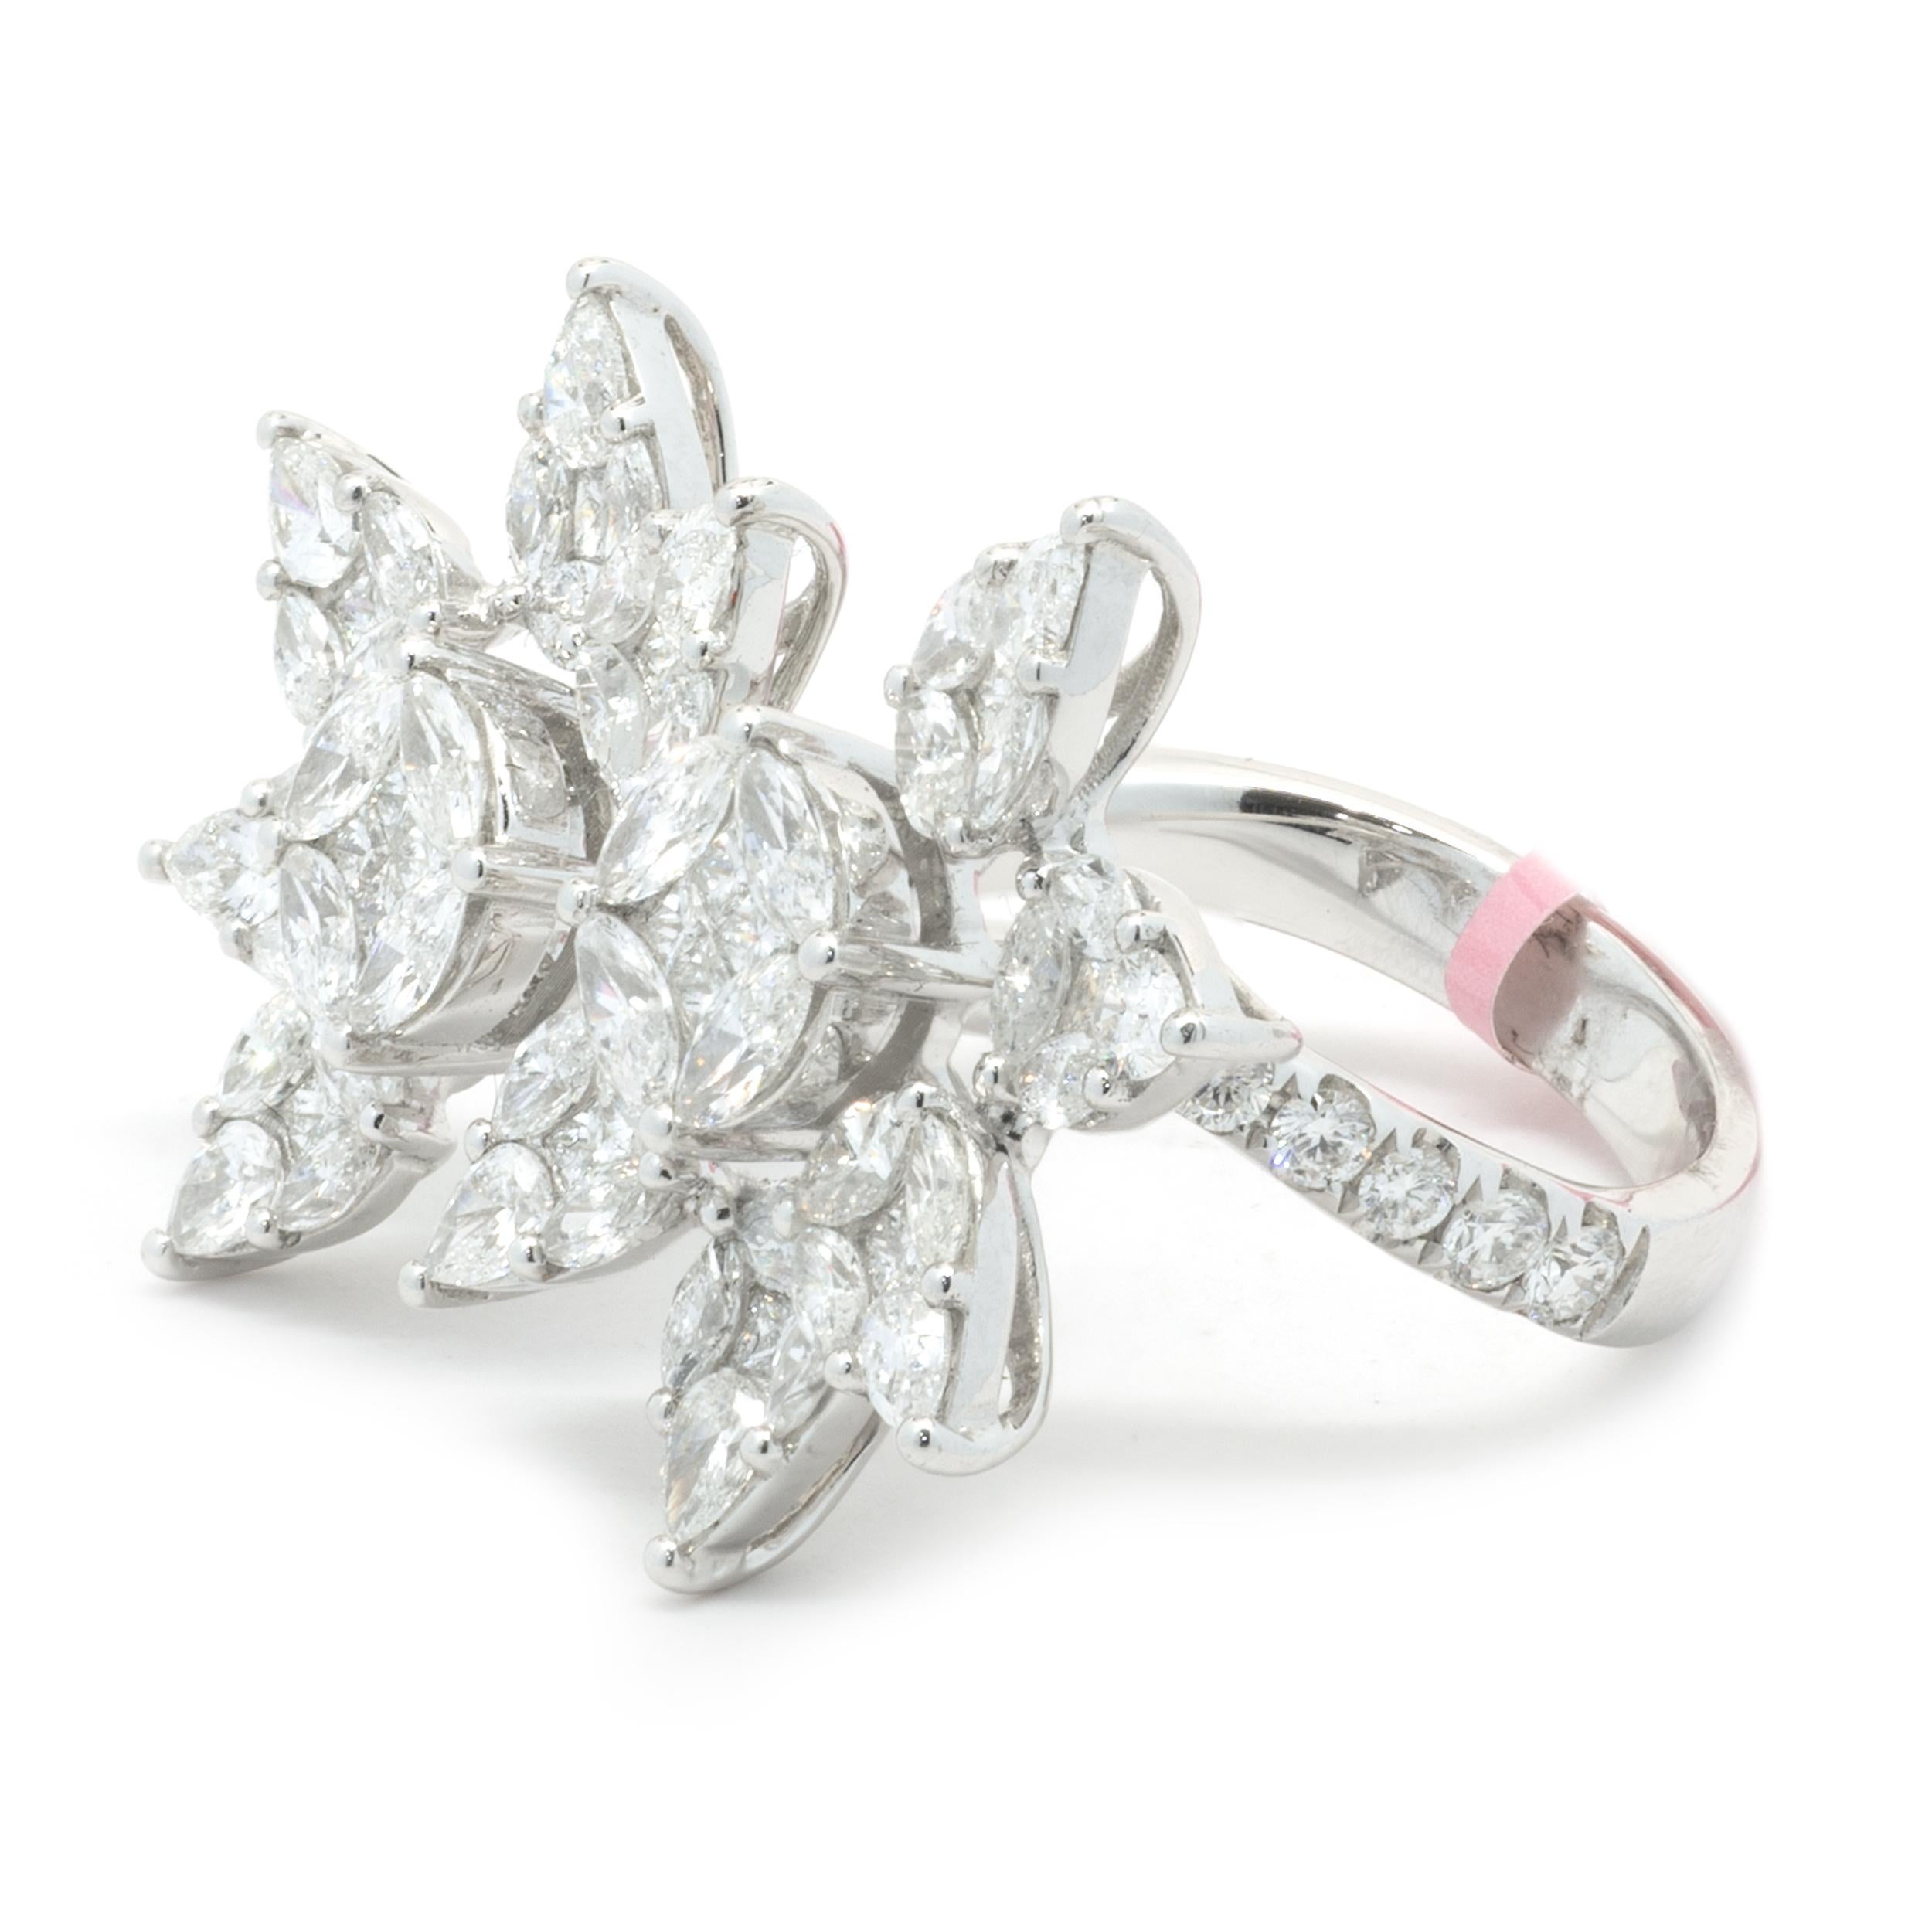 Mixed Cut 18 Karat Double Flower Diamond Ring 